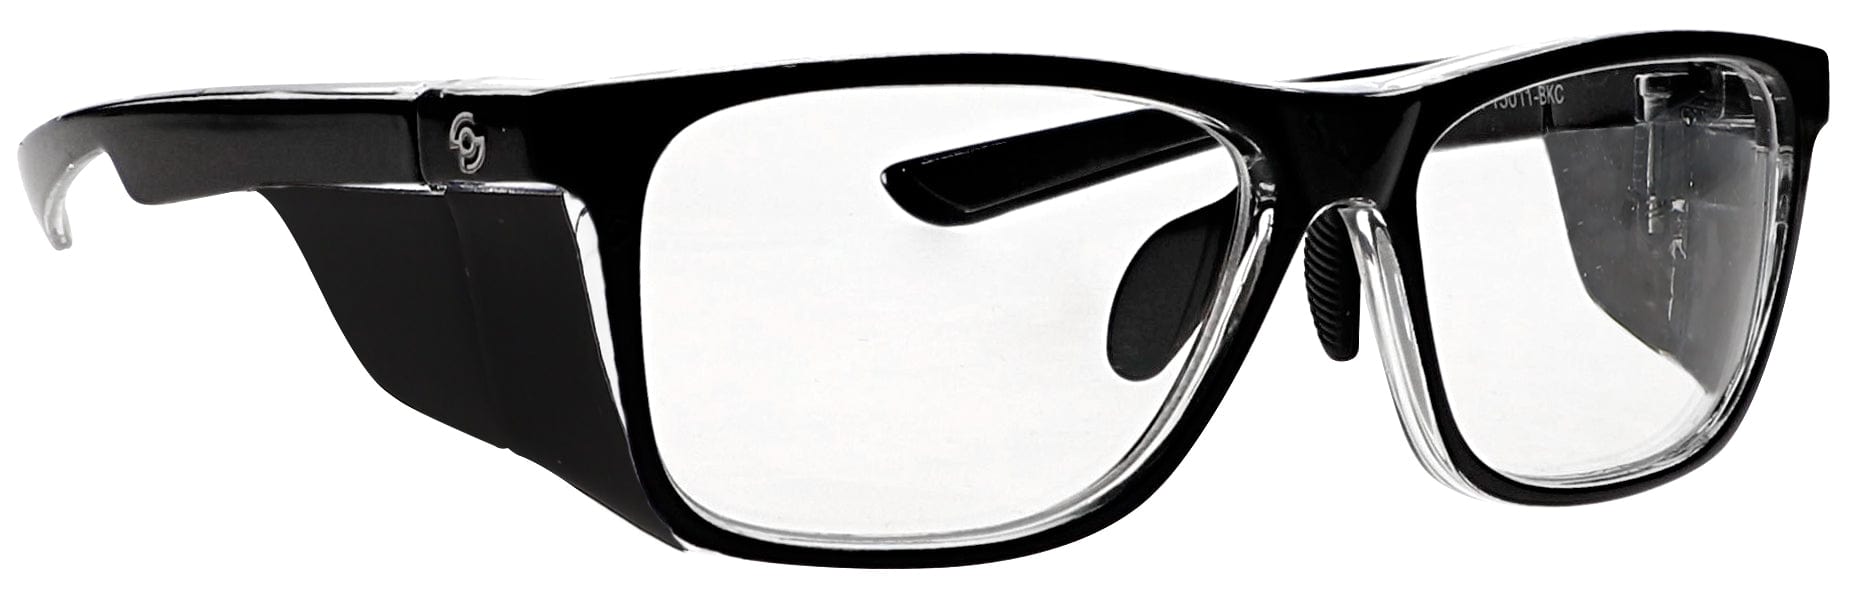 Safety Glasses USA - Safety Glasses, Sunglasses, Safety Equipment